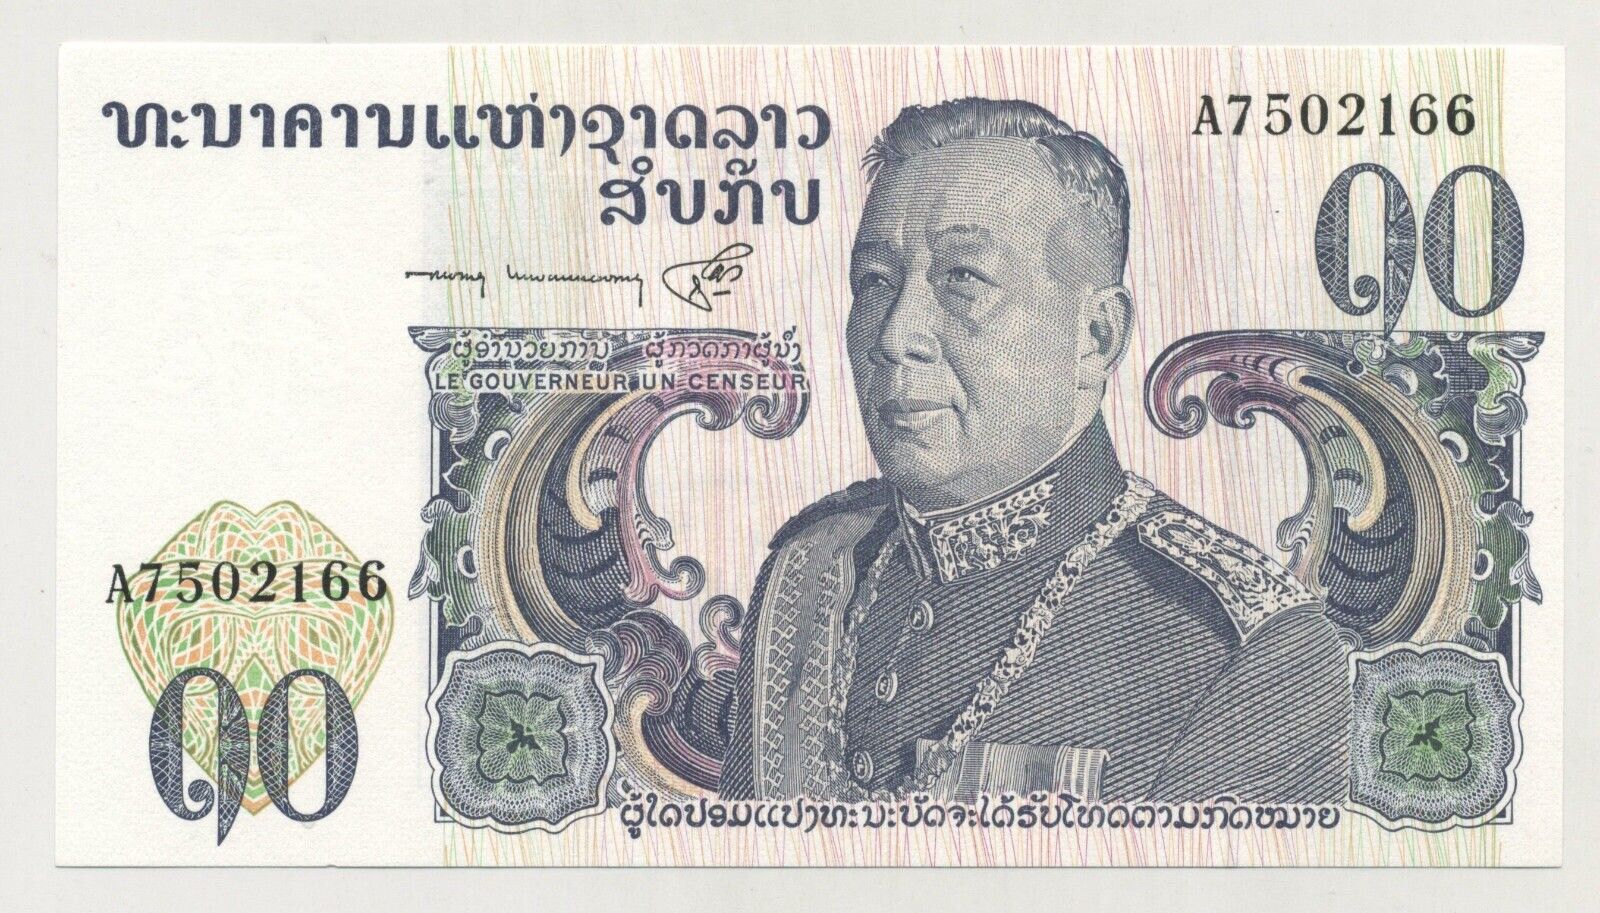 Laos Lao 10 Kip Nd 1974 Pick 15.a Unc Uncirculated Banknote